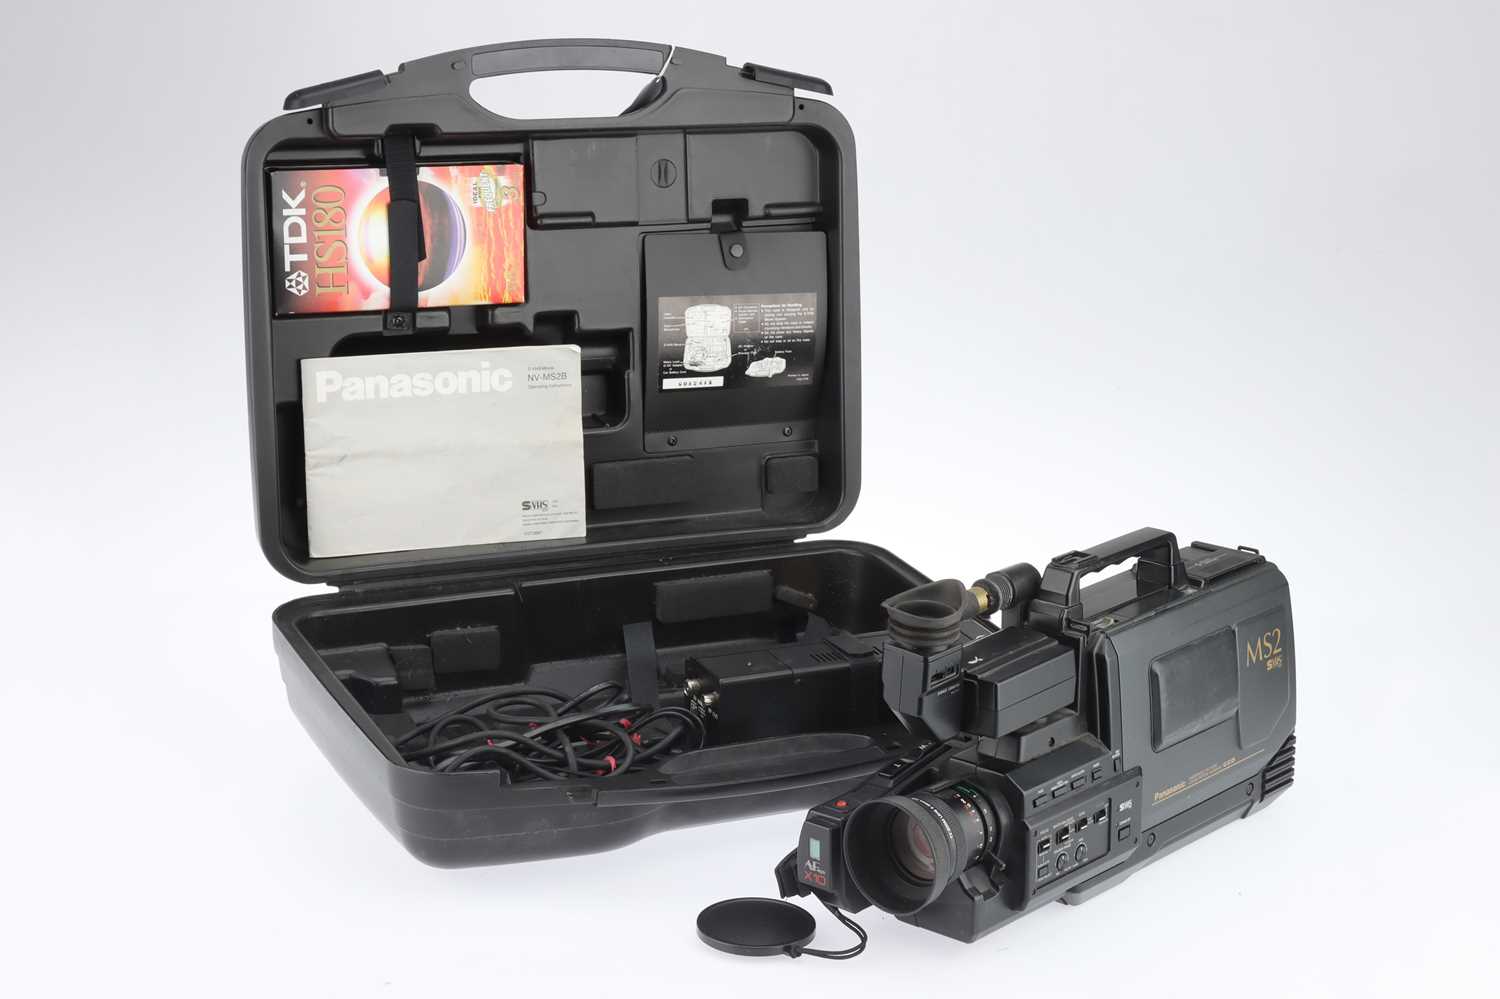 Lot 570 - A Panasonic NV-MS2 VHS Video Camcorder